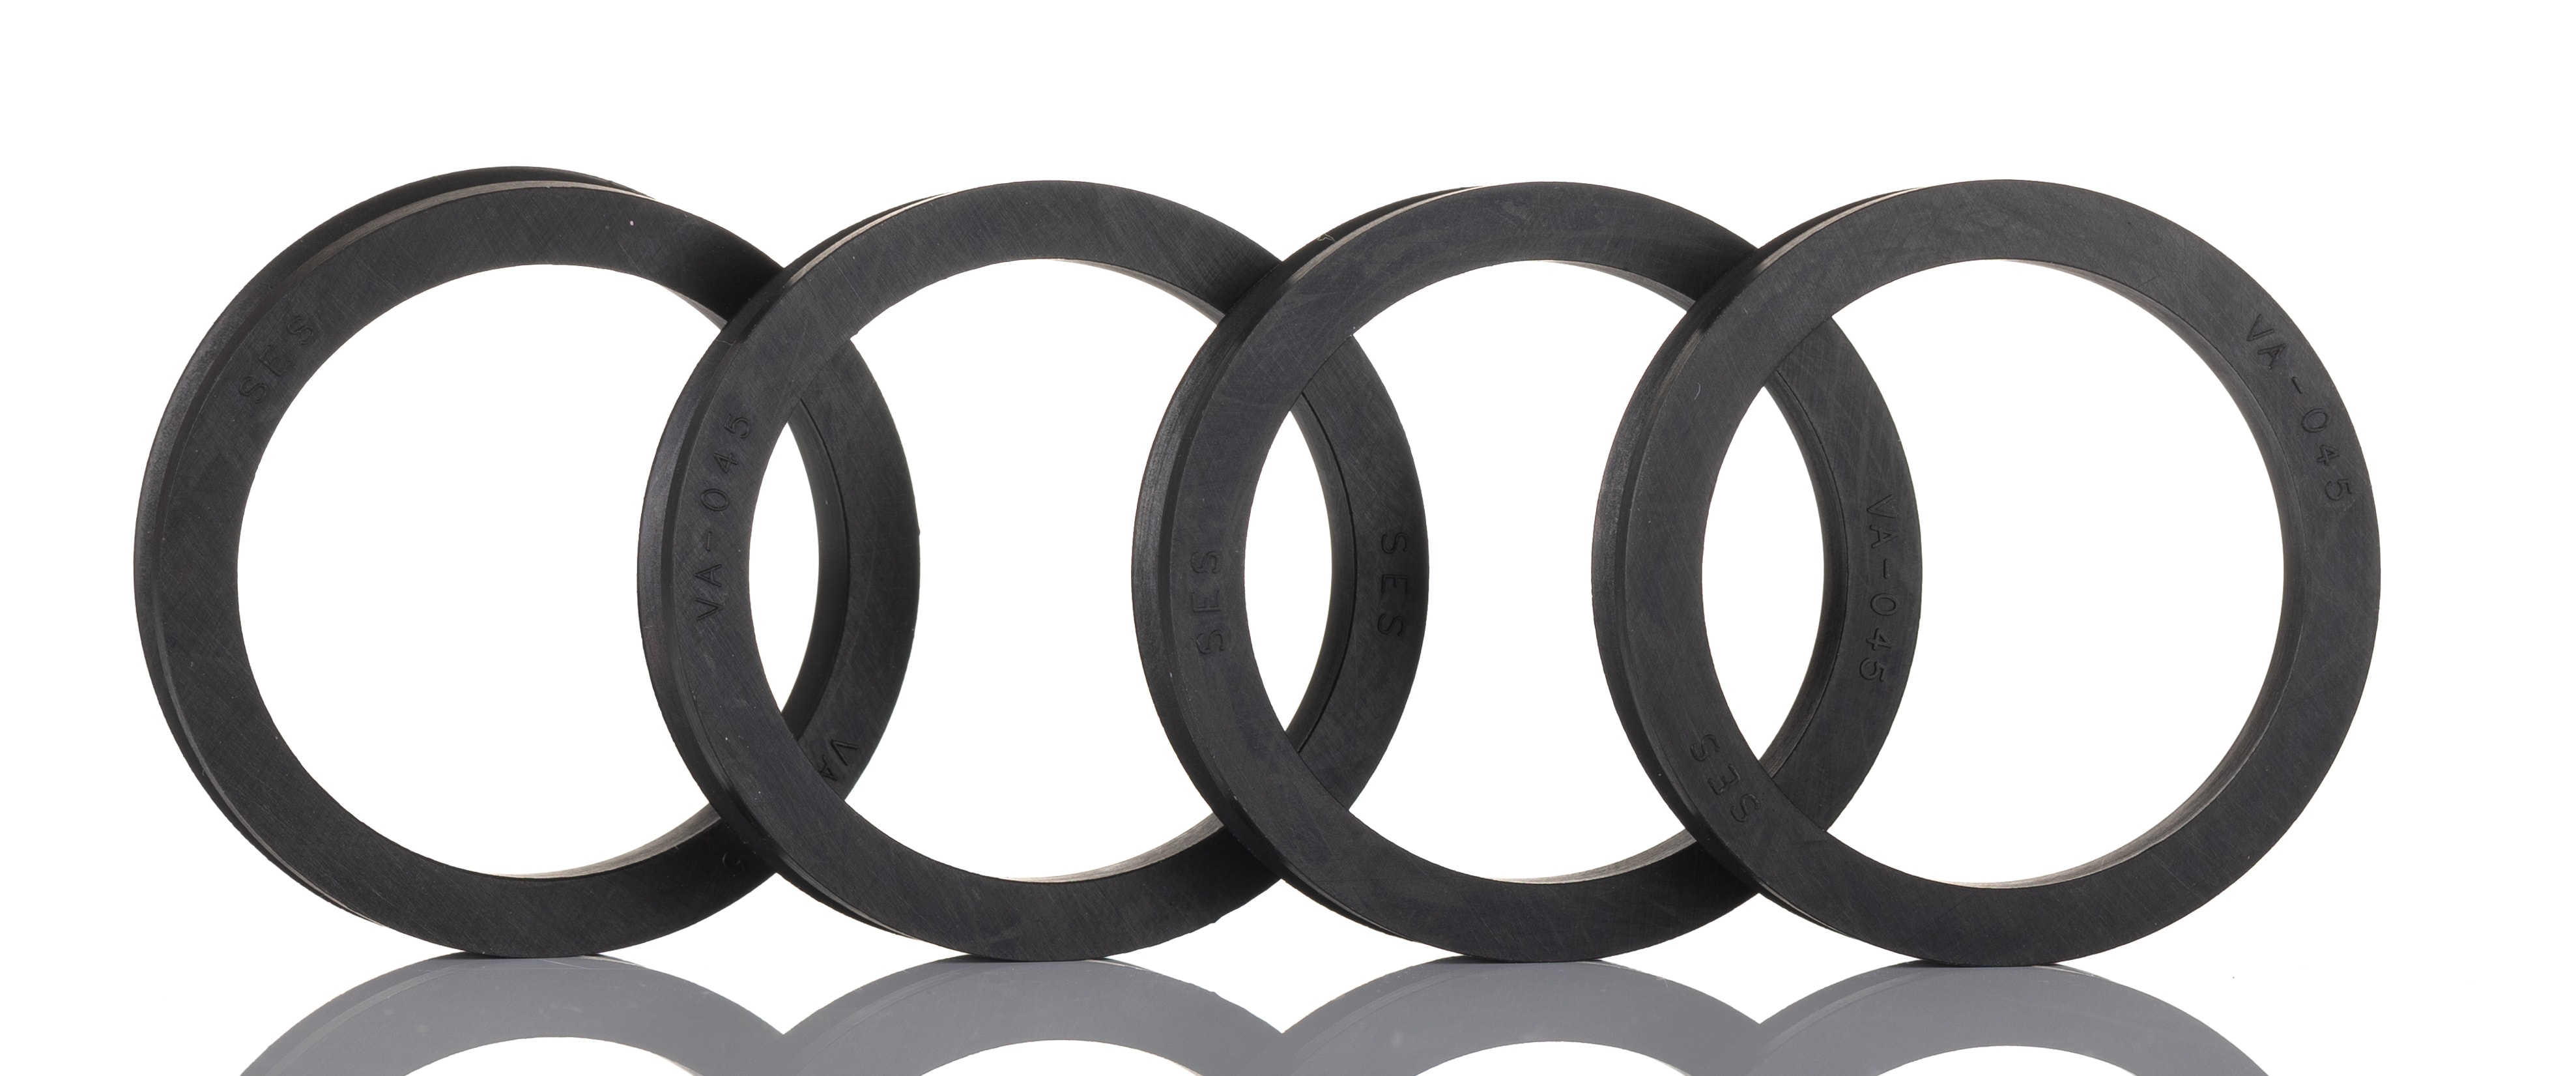 Gapi Wear rings NG - Pneumatic sealing systems Series - Gapi Wear rings